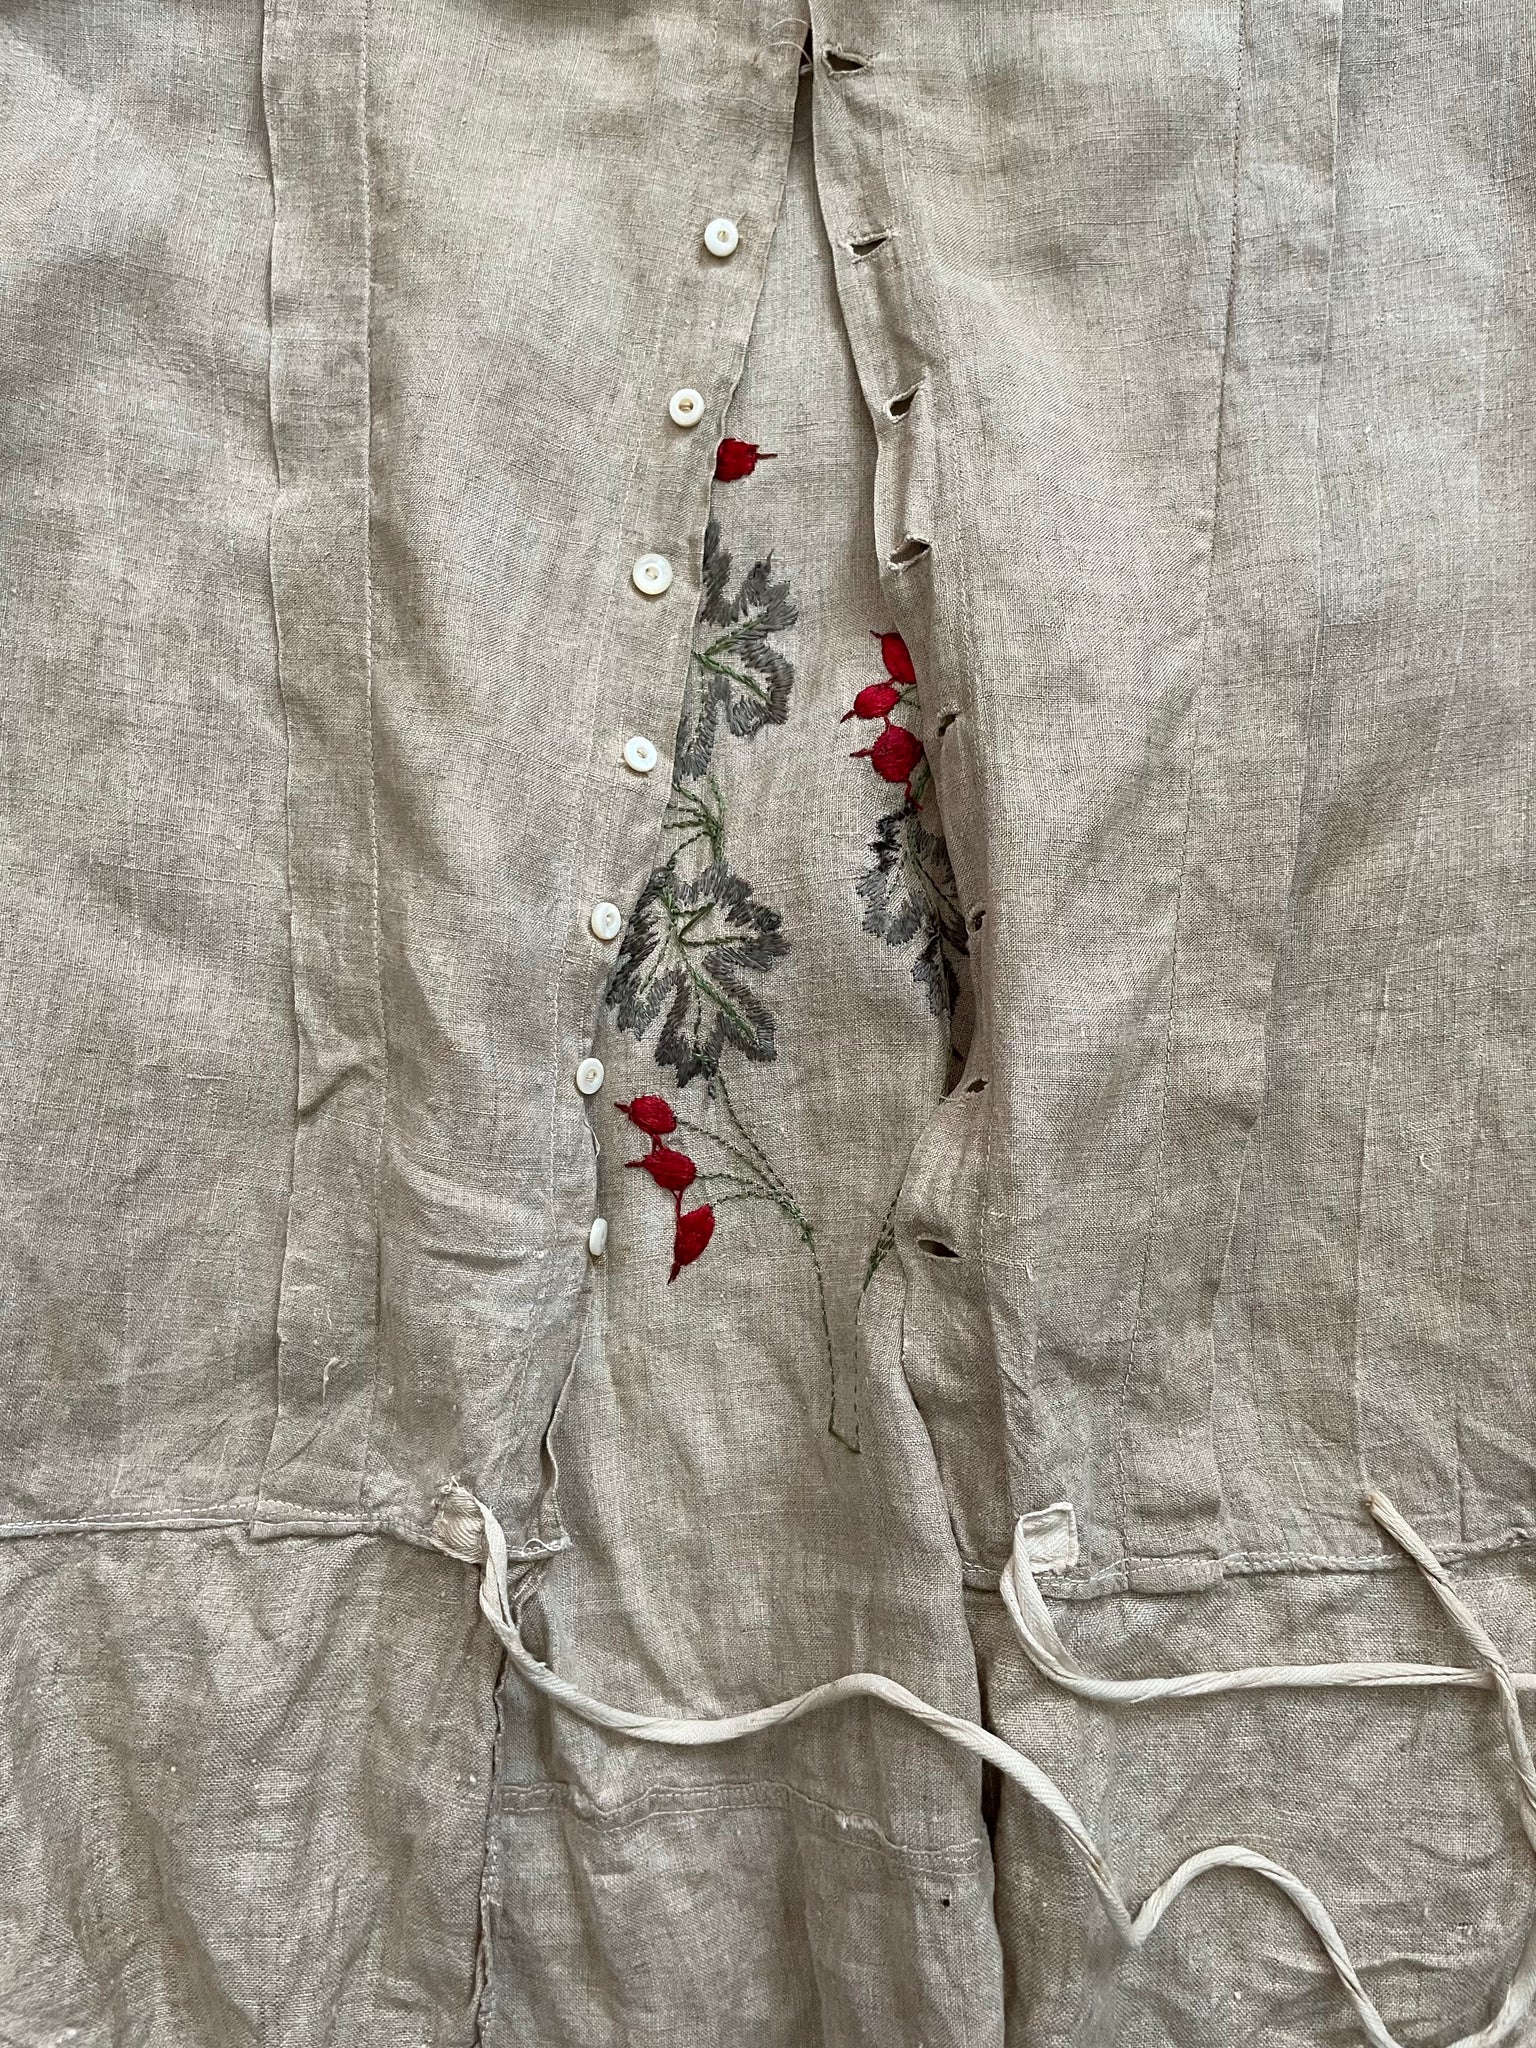 RARE Edwardian Embroidered Foliage Motif Linen Sportswear Ensemble